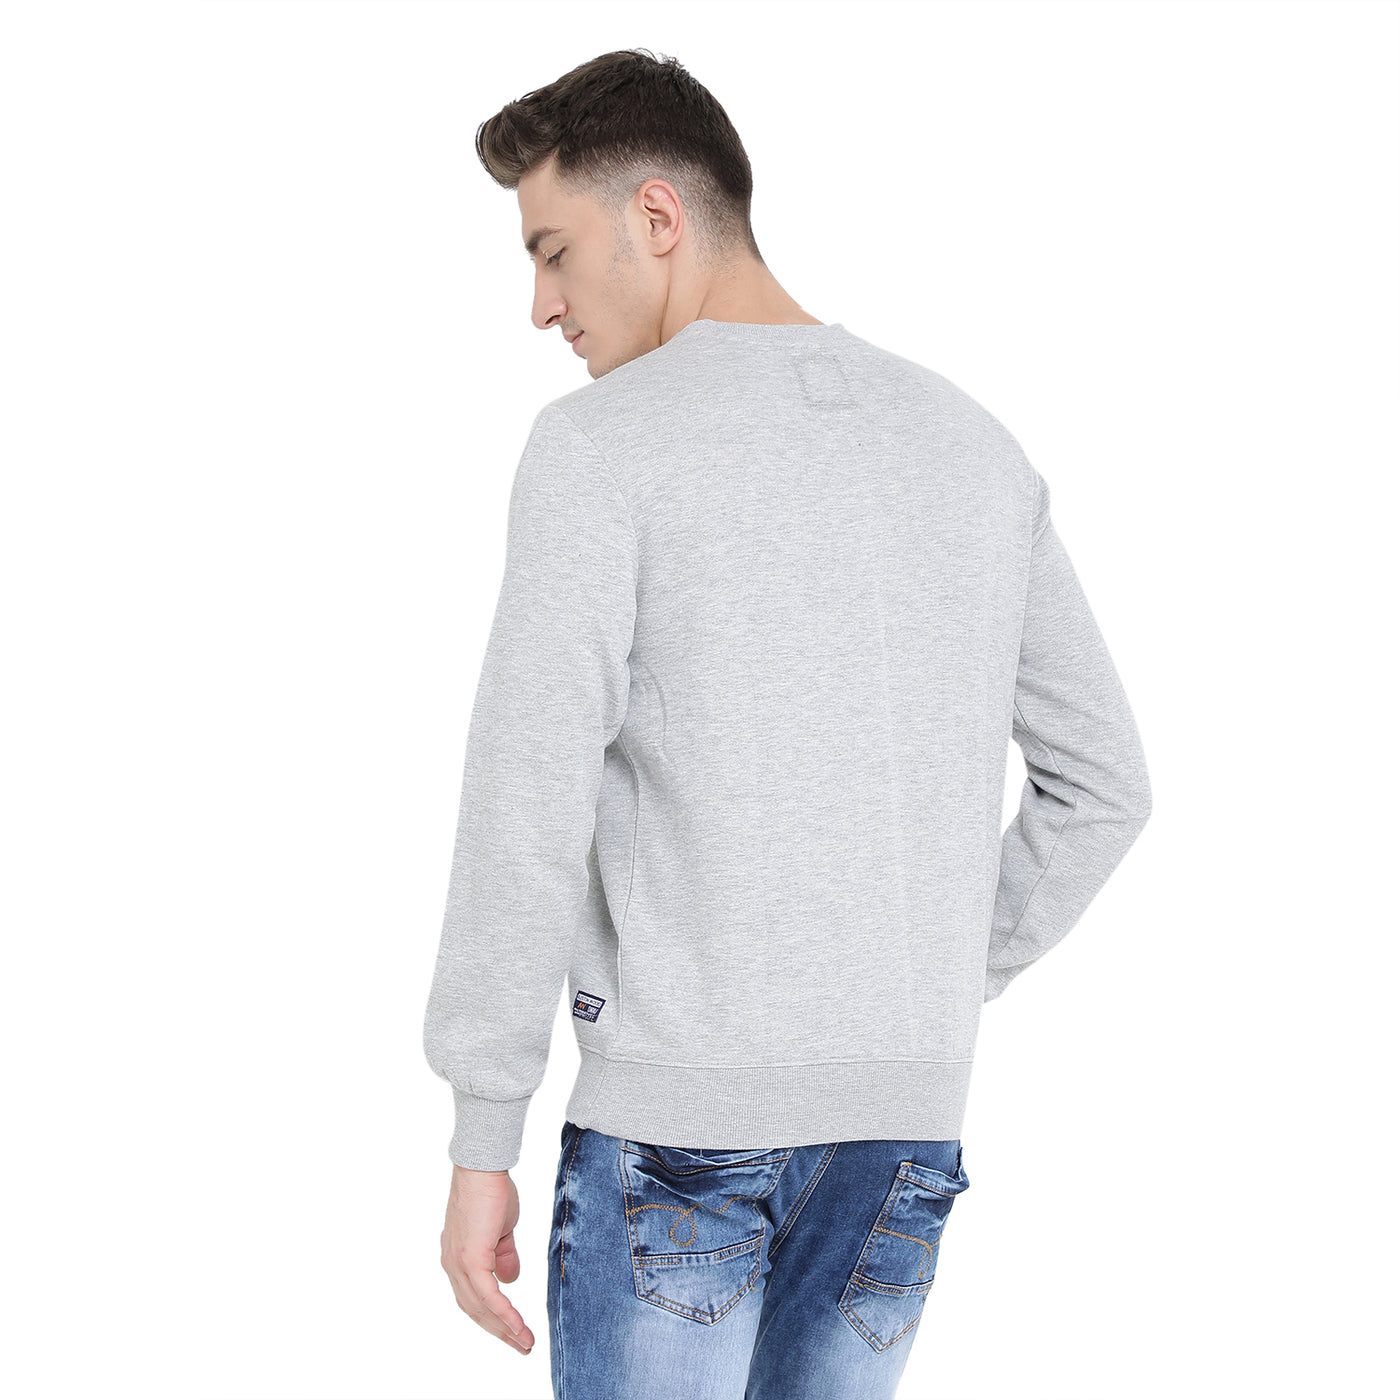 Men's Grey Printed Round Neck Sweatshirt